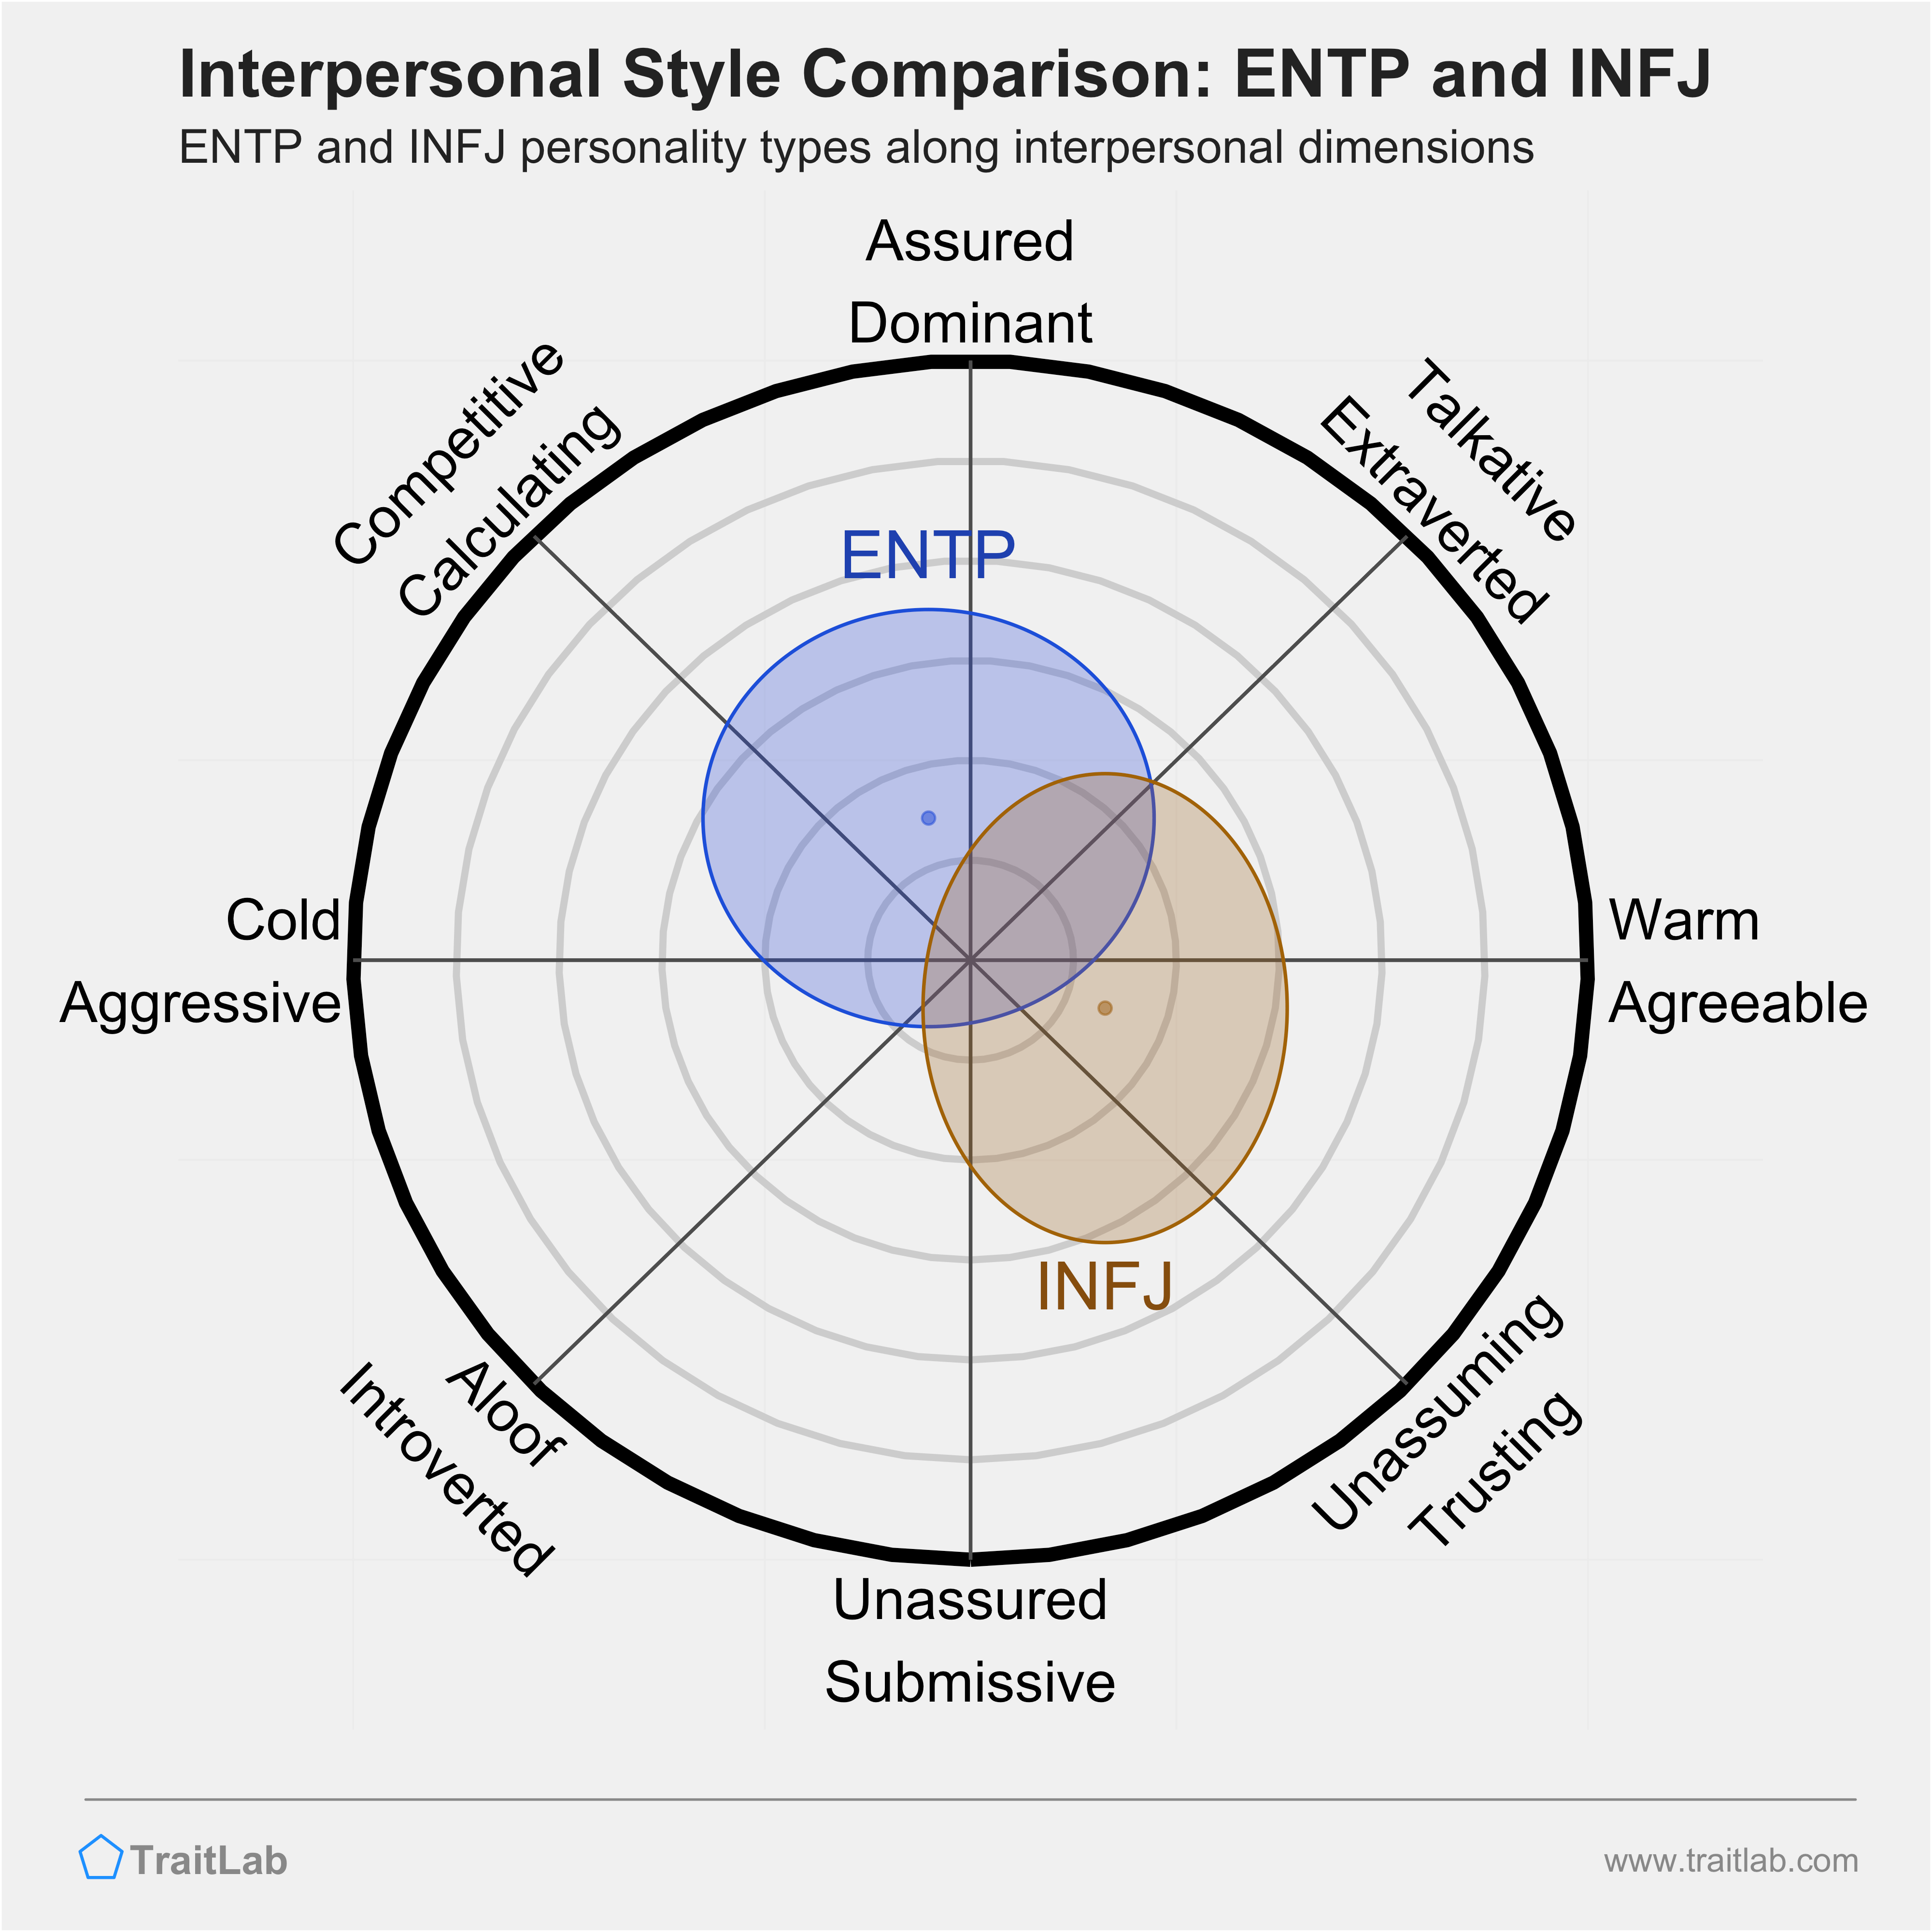 ENTP and INFJ comparison across interpersonal dimensions